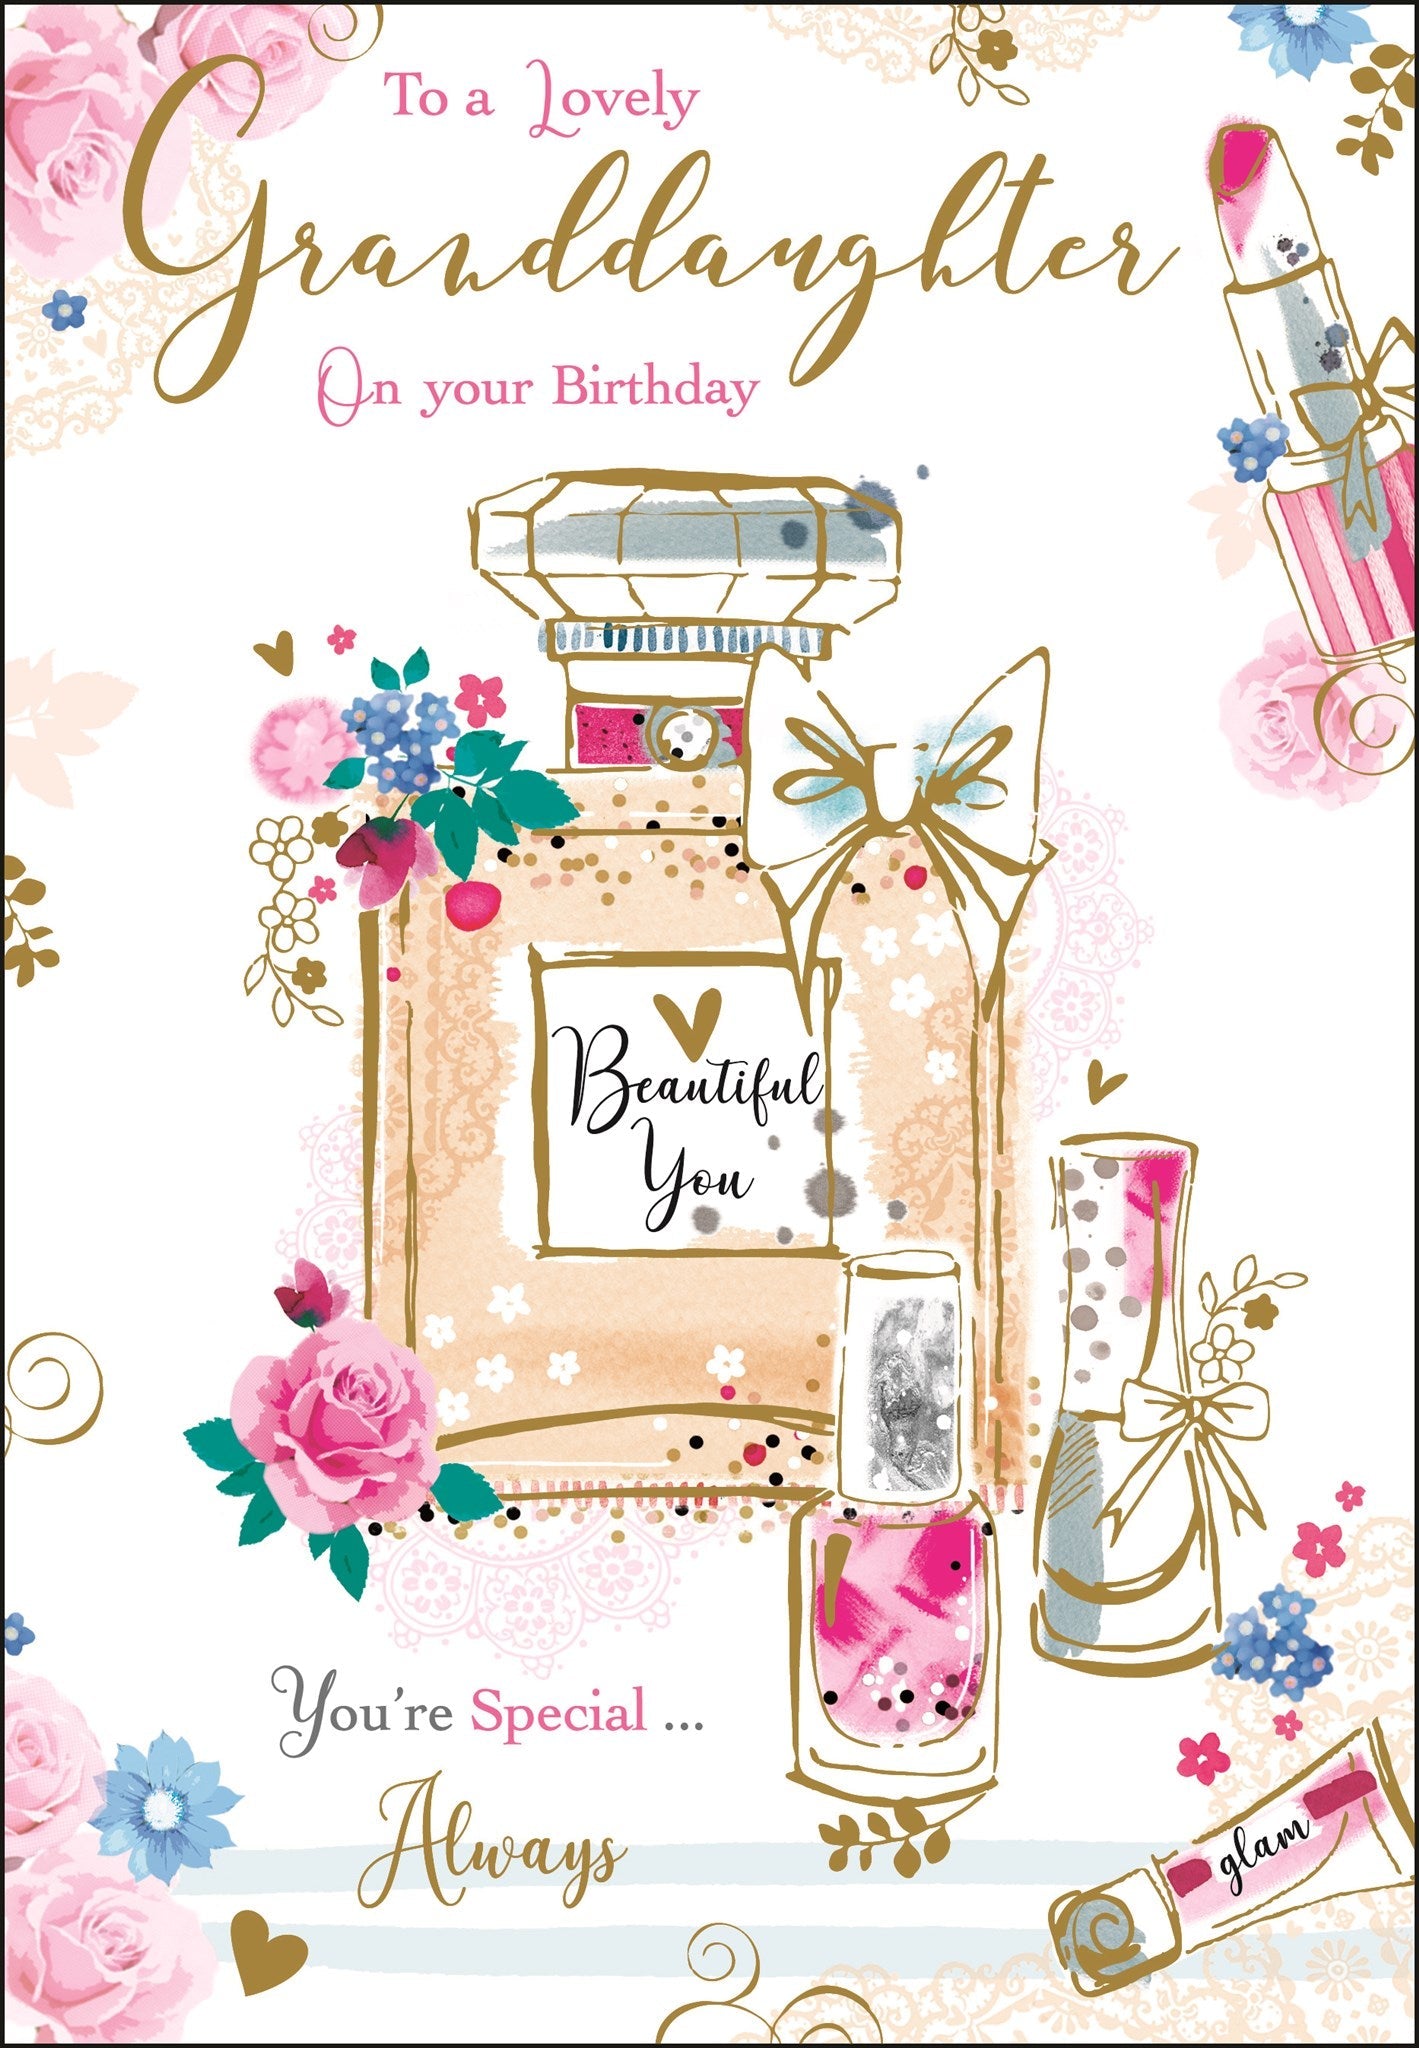 Granddaughter Birthday Card - Glamorous You